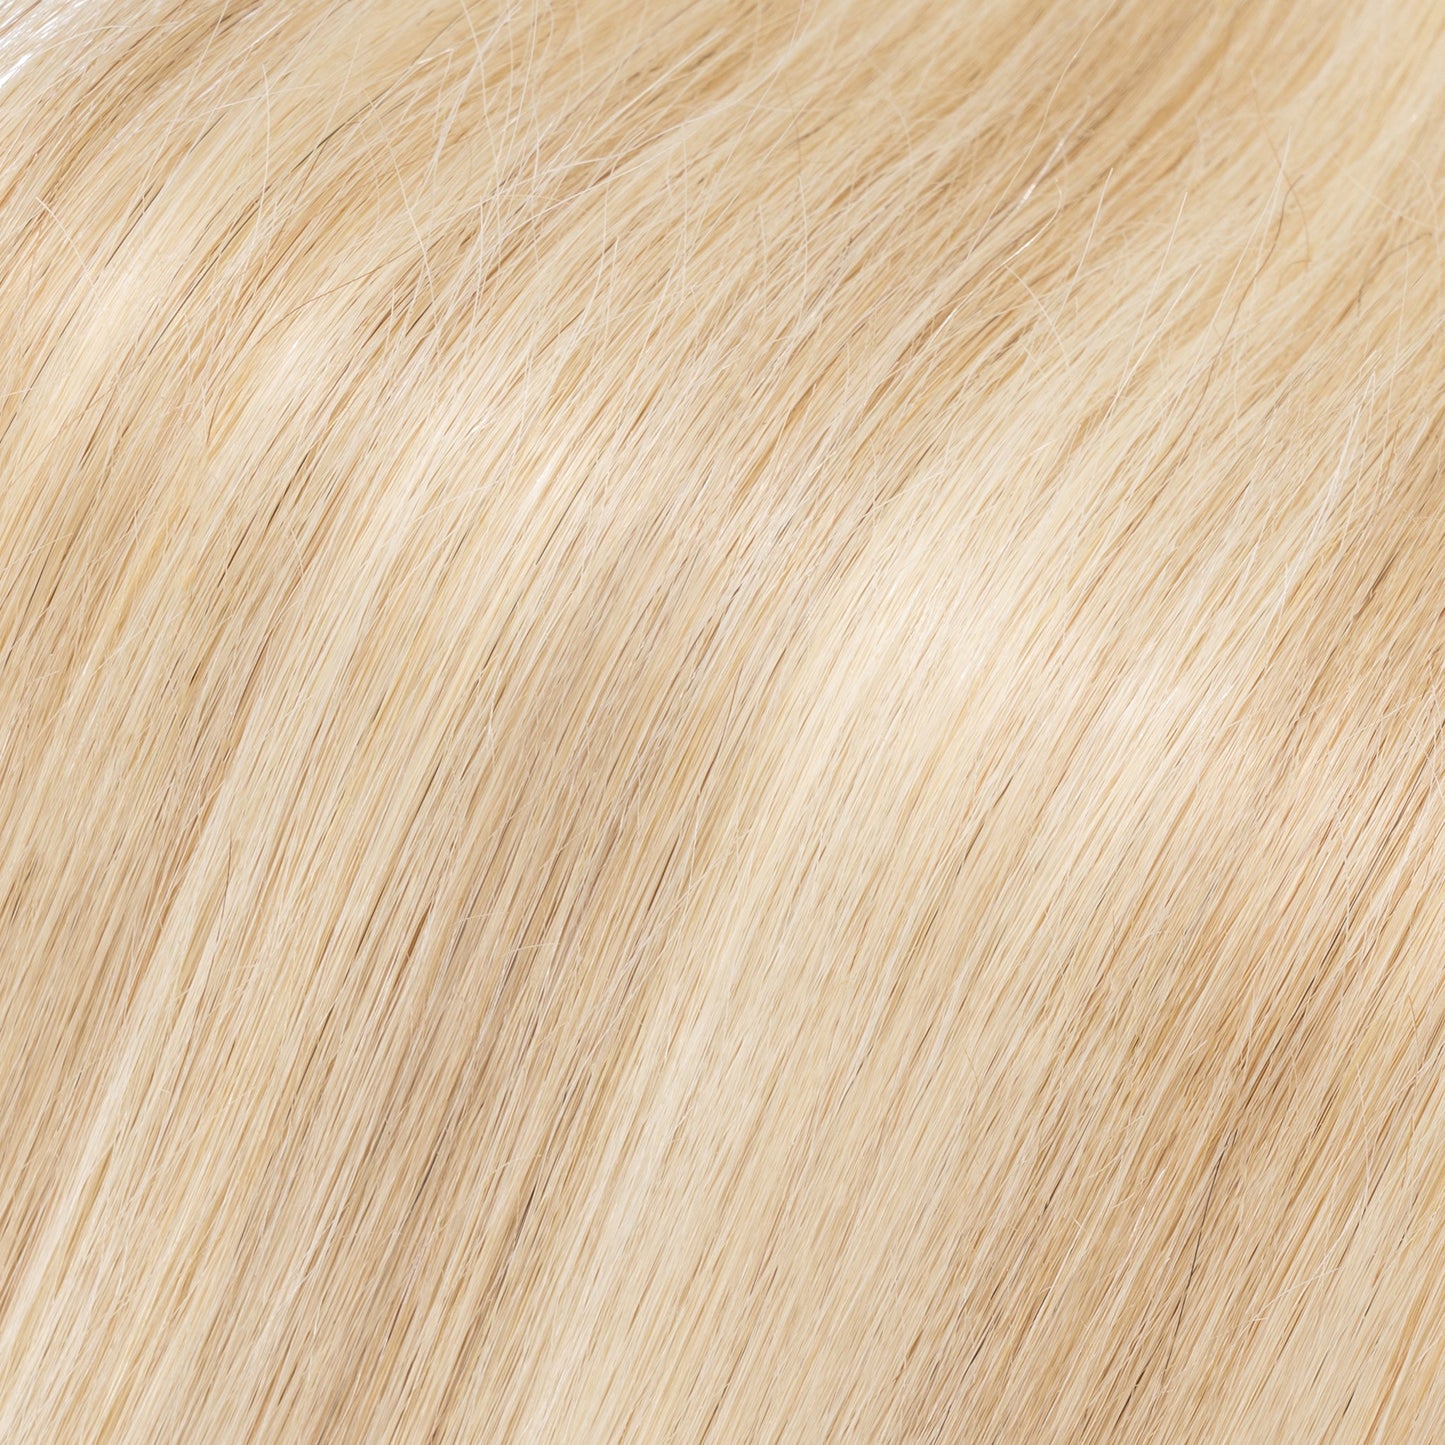 Ash Blonde Clip In Hair Extensions 8 PCS segohair.com